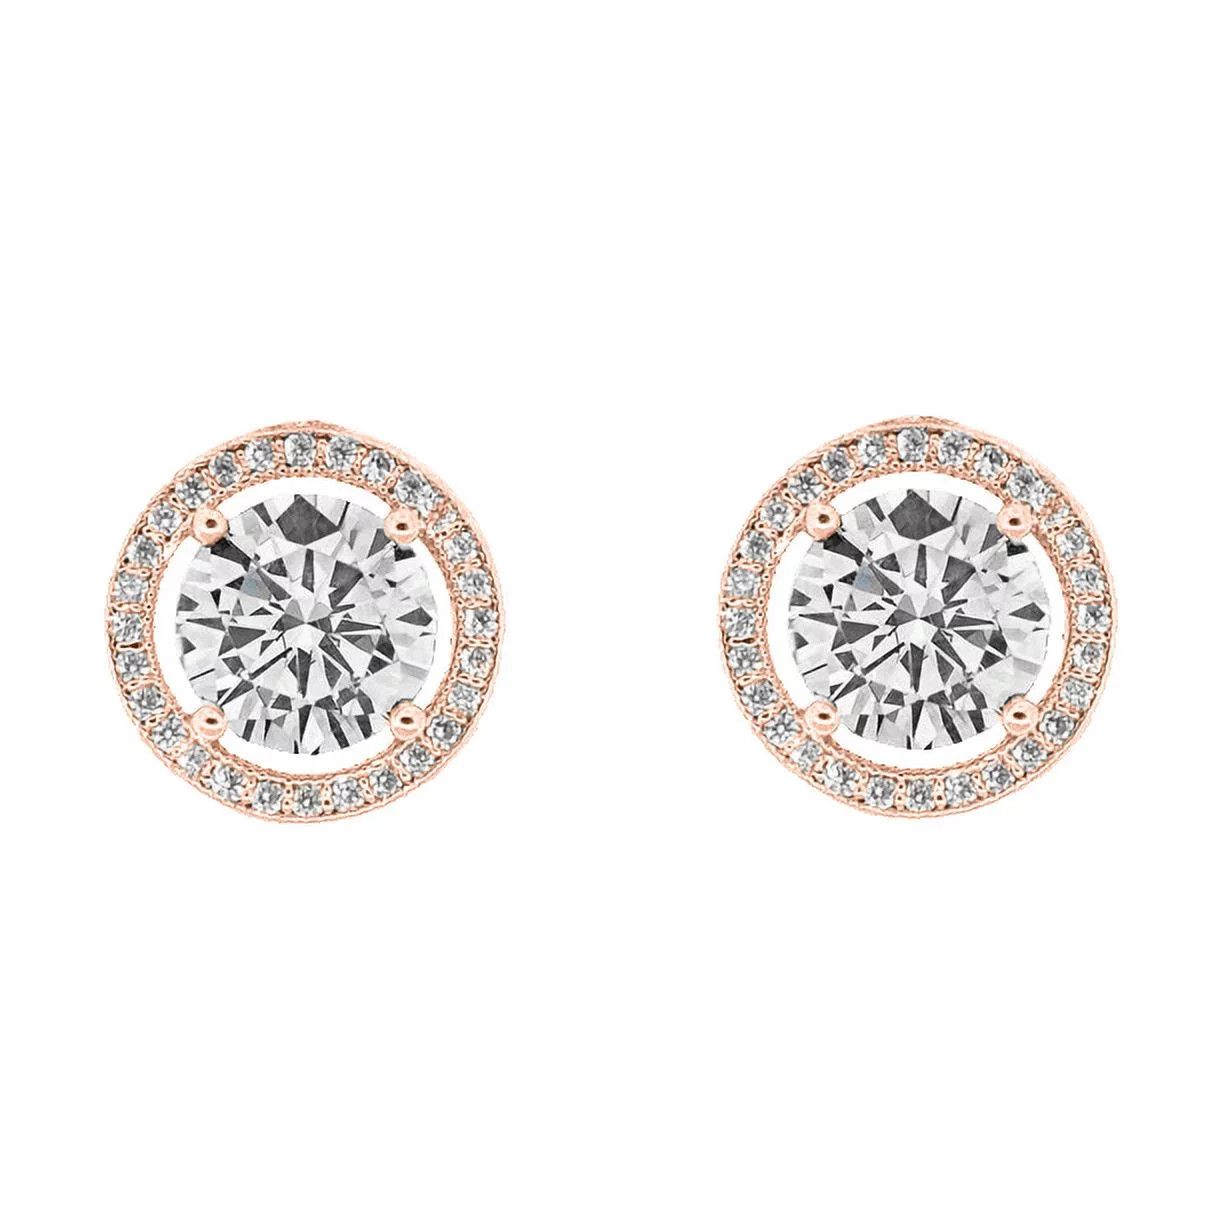 Cate & Chloe Ariel 18k Rose Gold Halo Stud Earrings | CZ Crystal Earrings for Women, Gift for Her | Walmart (US)